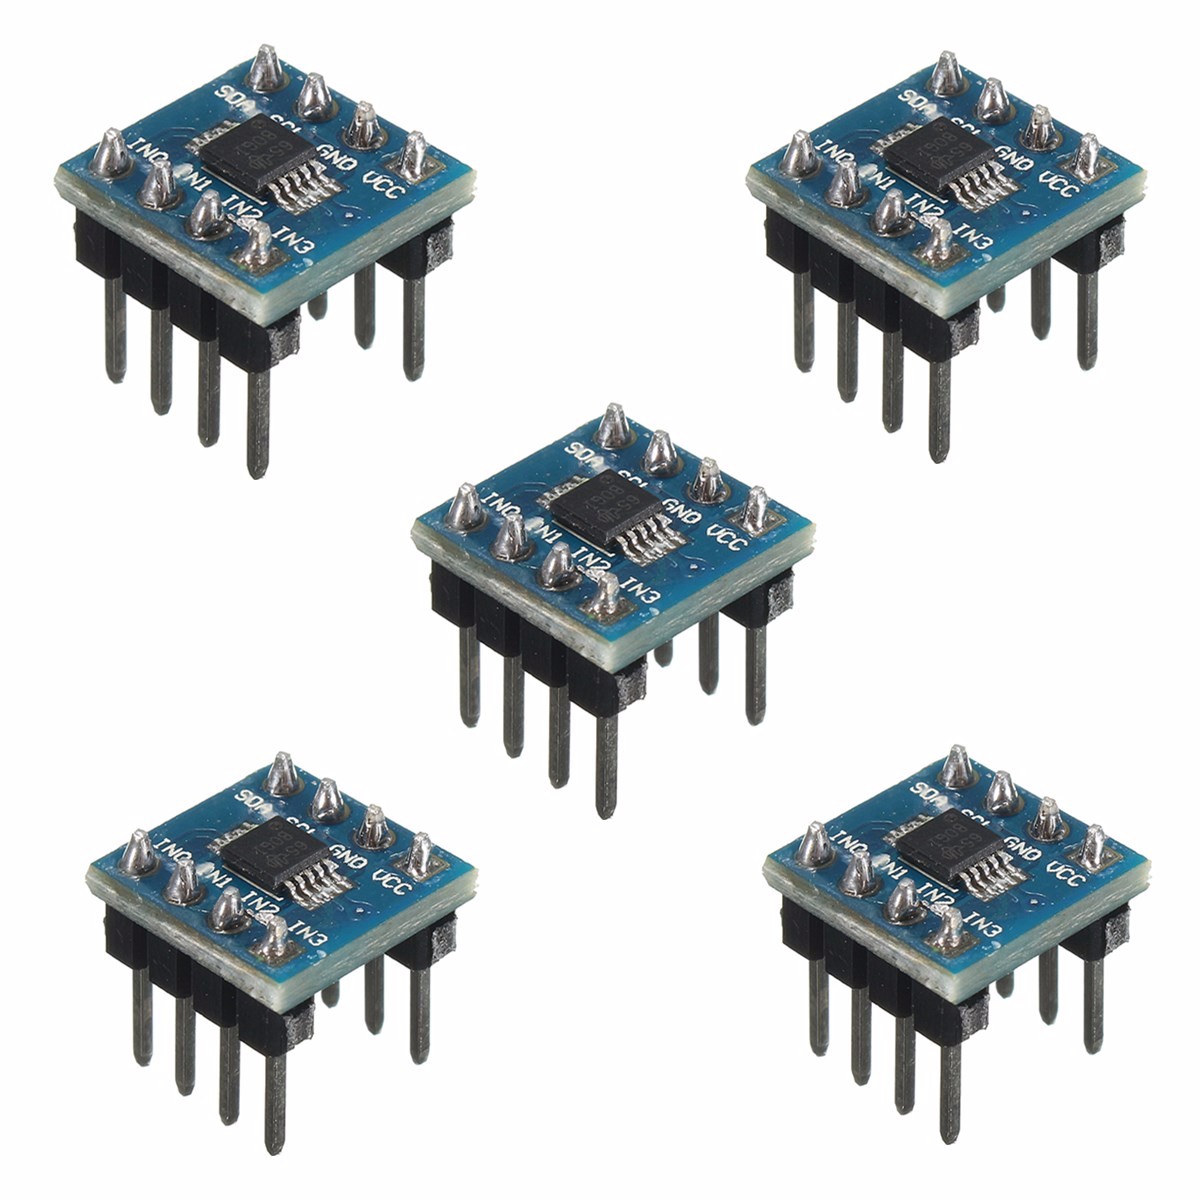 

5Pcs Mini ADS1115 Module 4 Channel 16 Bit I2C ADC Pro Gain Amplifier For Arduino